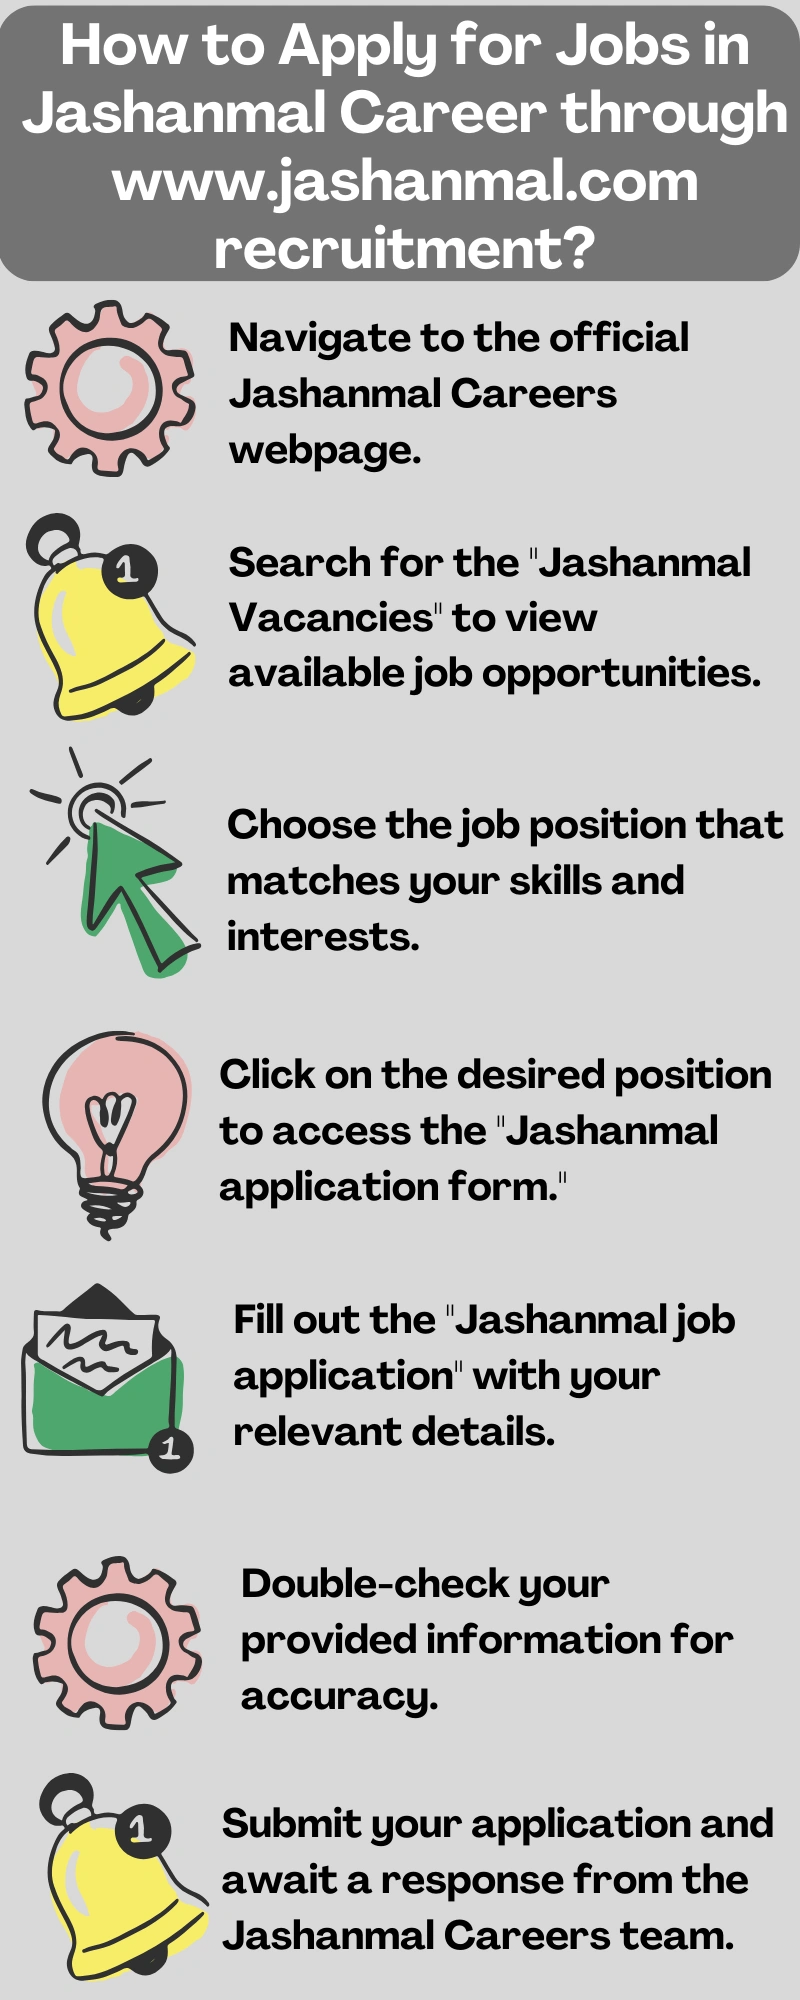 How to Apply for Jobs in Jashanmal Career through www.jashanmal.com recruitment?